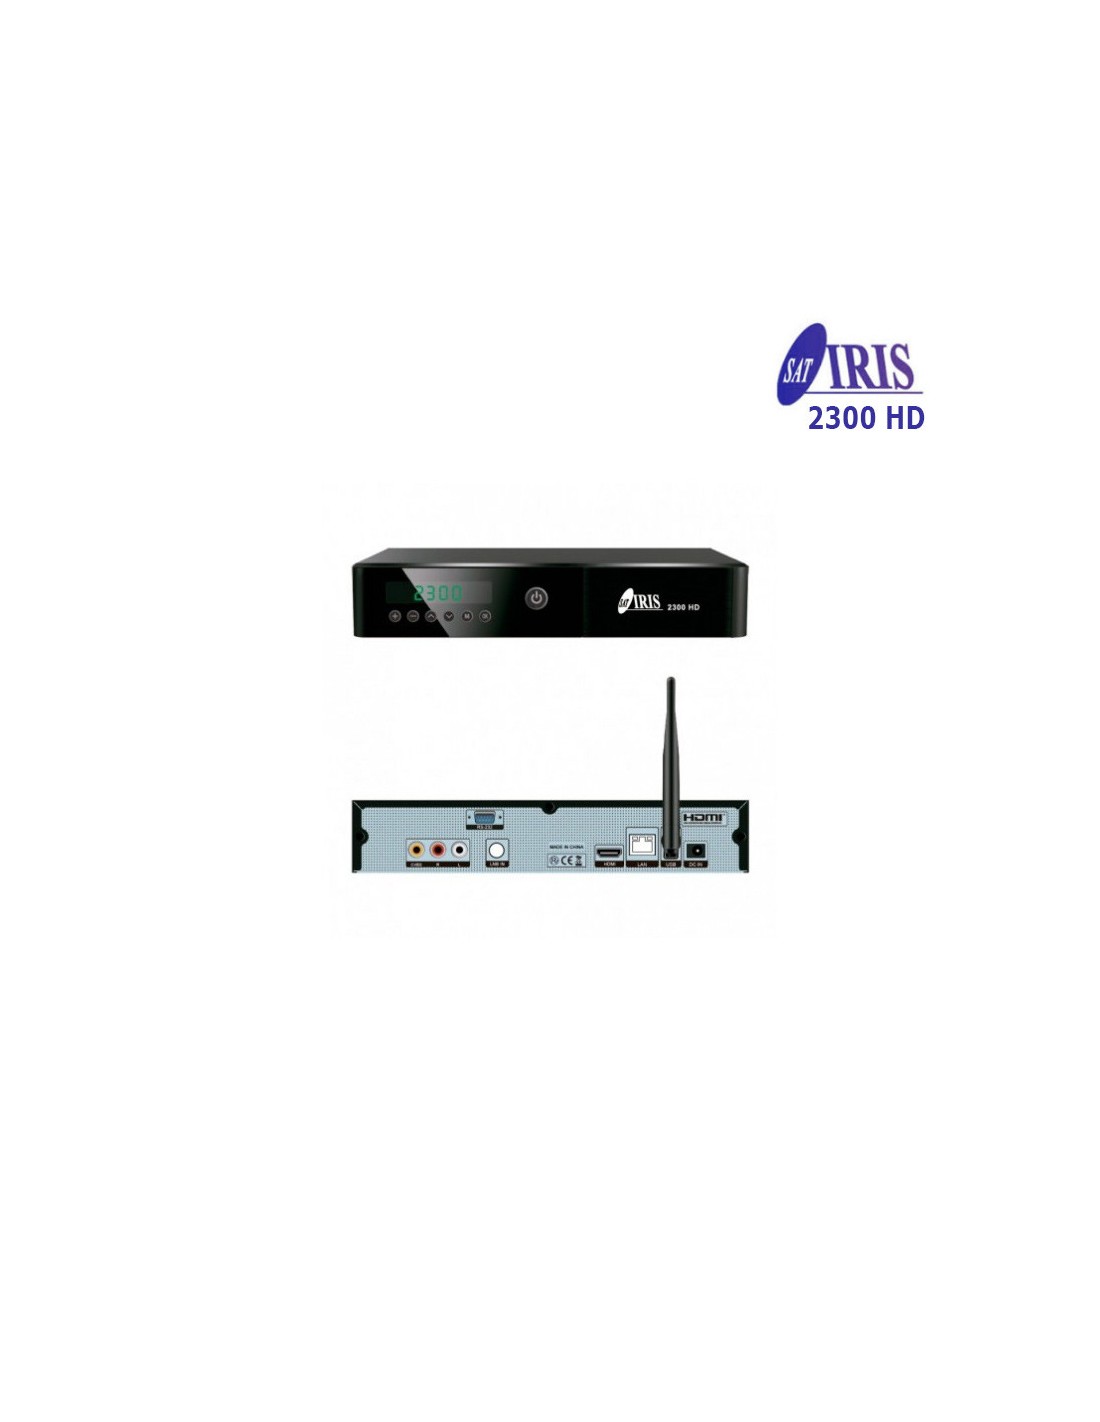 Iris 2300 HD  ▷ Comprar Iris 2300 HD ◁